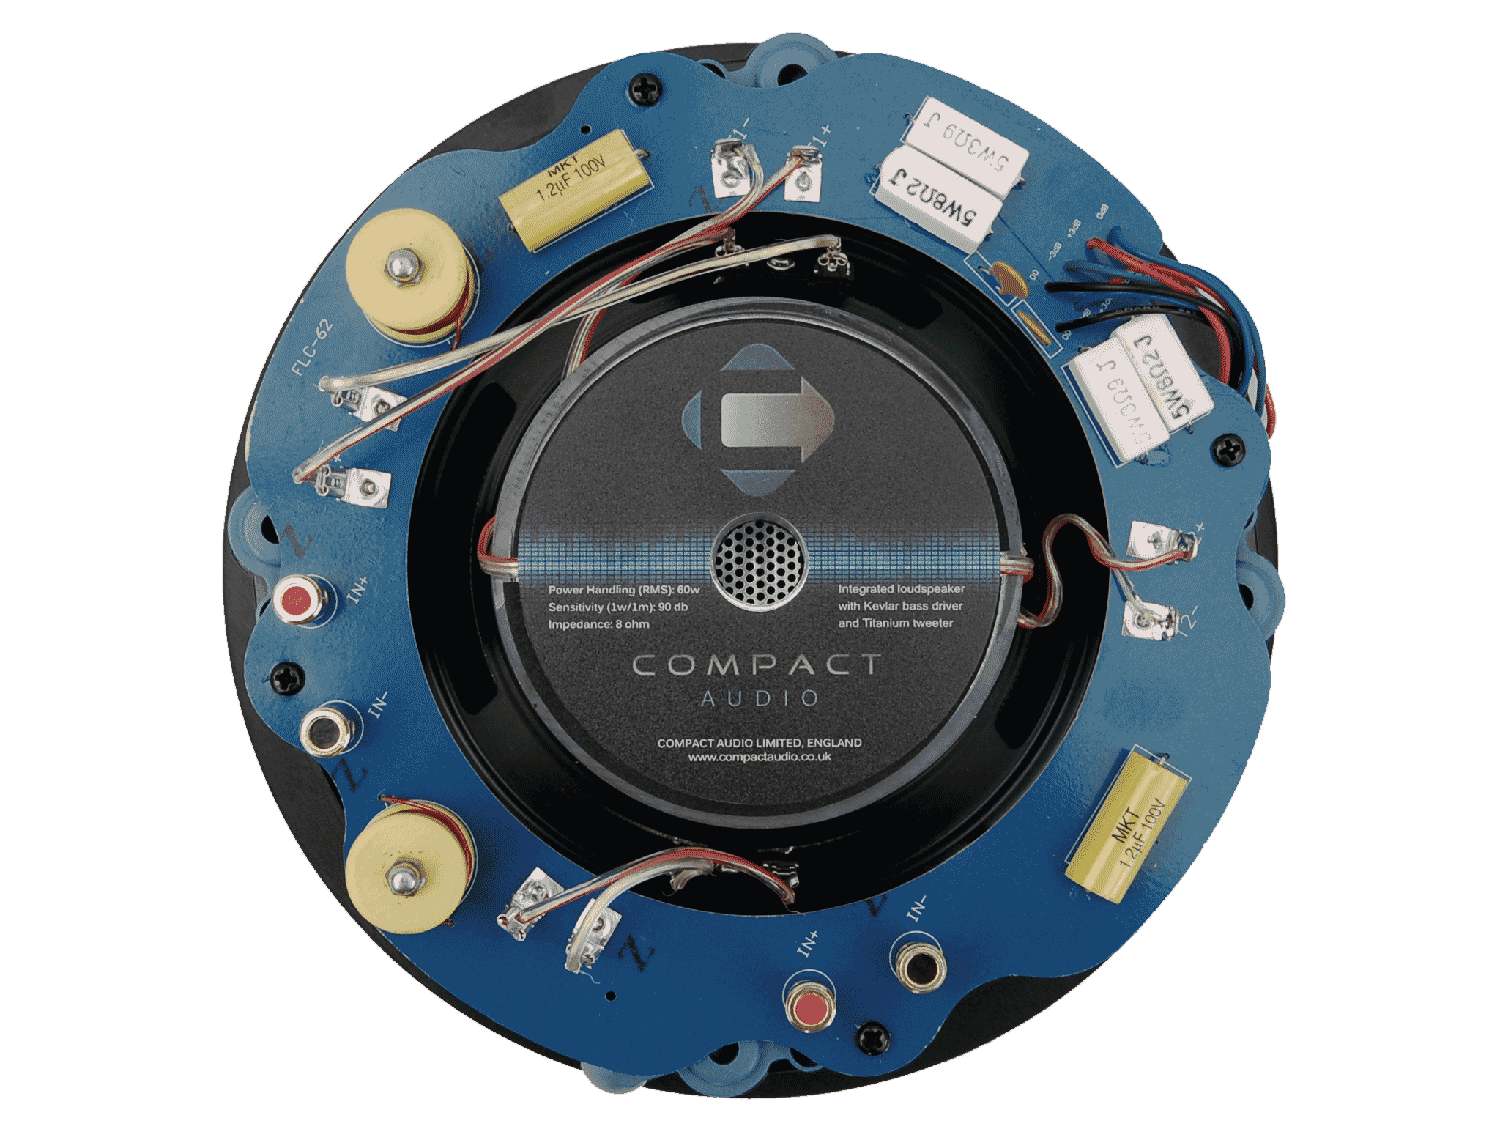 Compact Audio Fidelity C6S Ceiling Speaker Back